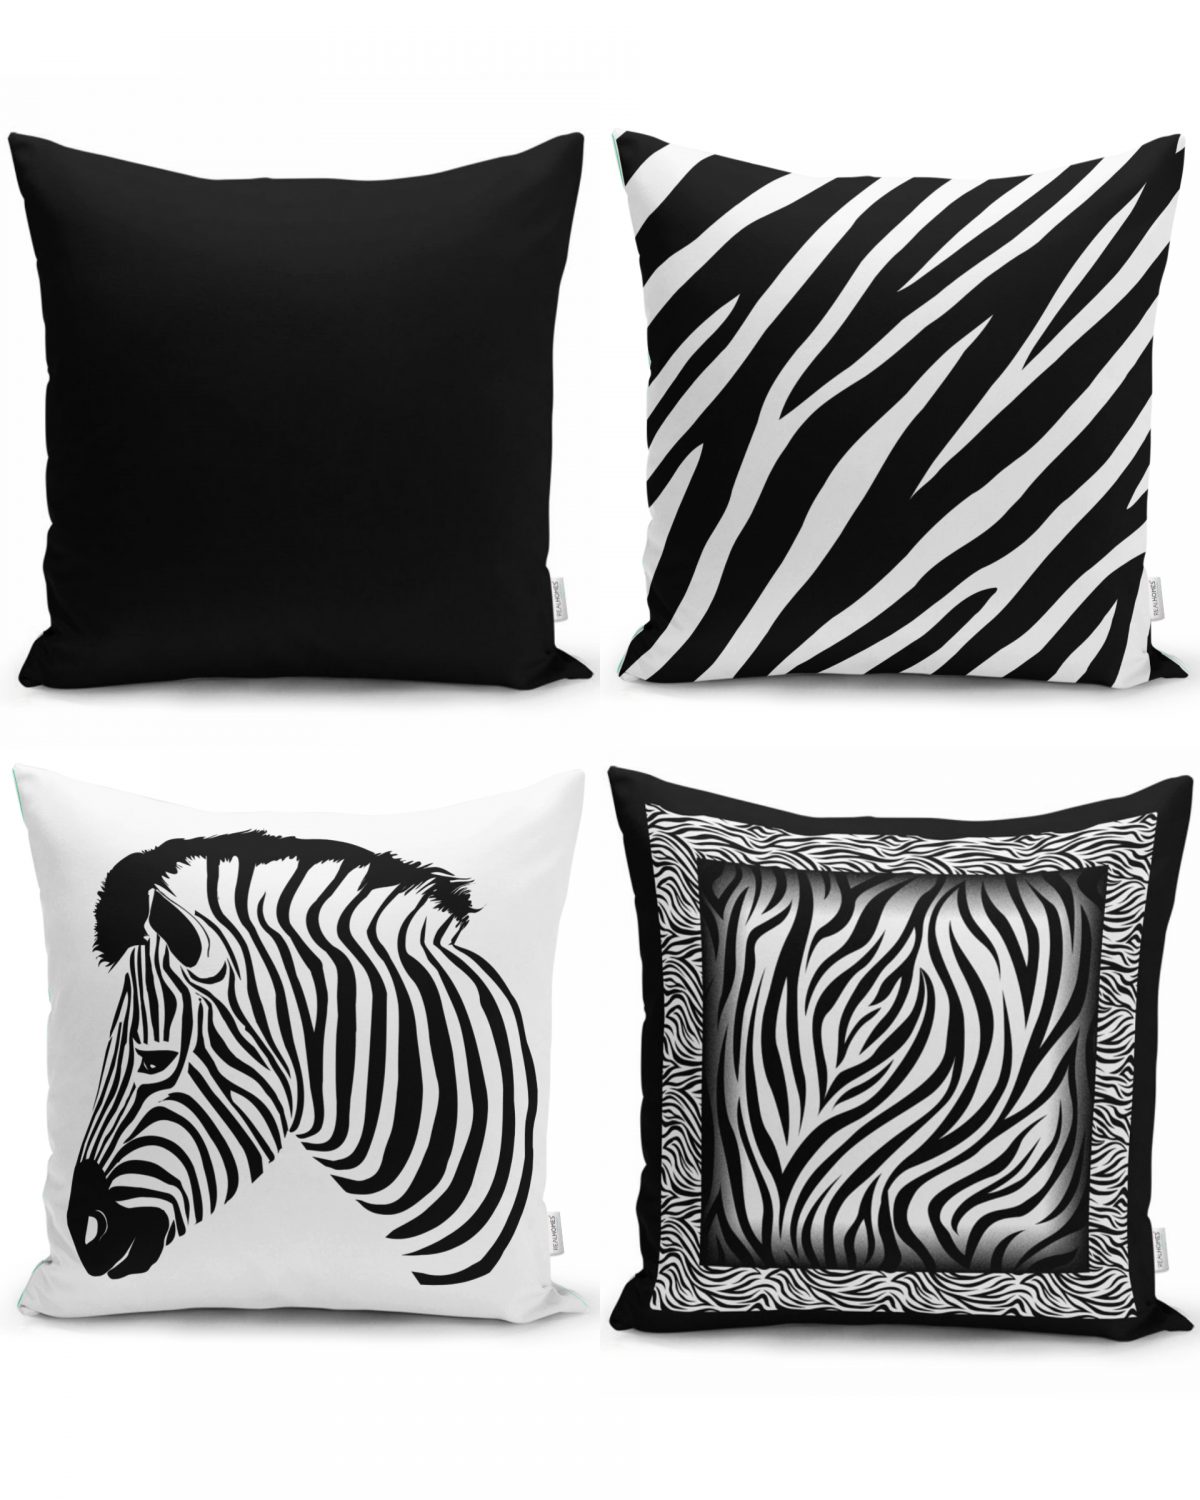 Realhomes Siyah Beyaz Zebra Motifleri 4'lü Kırlent Kılıfı Seti Realhomes